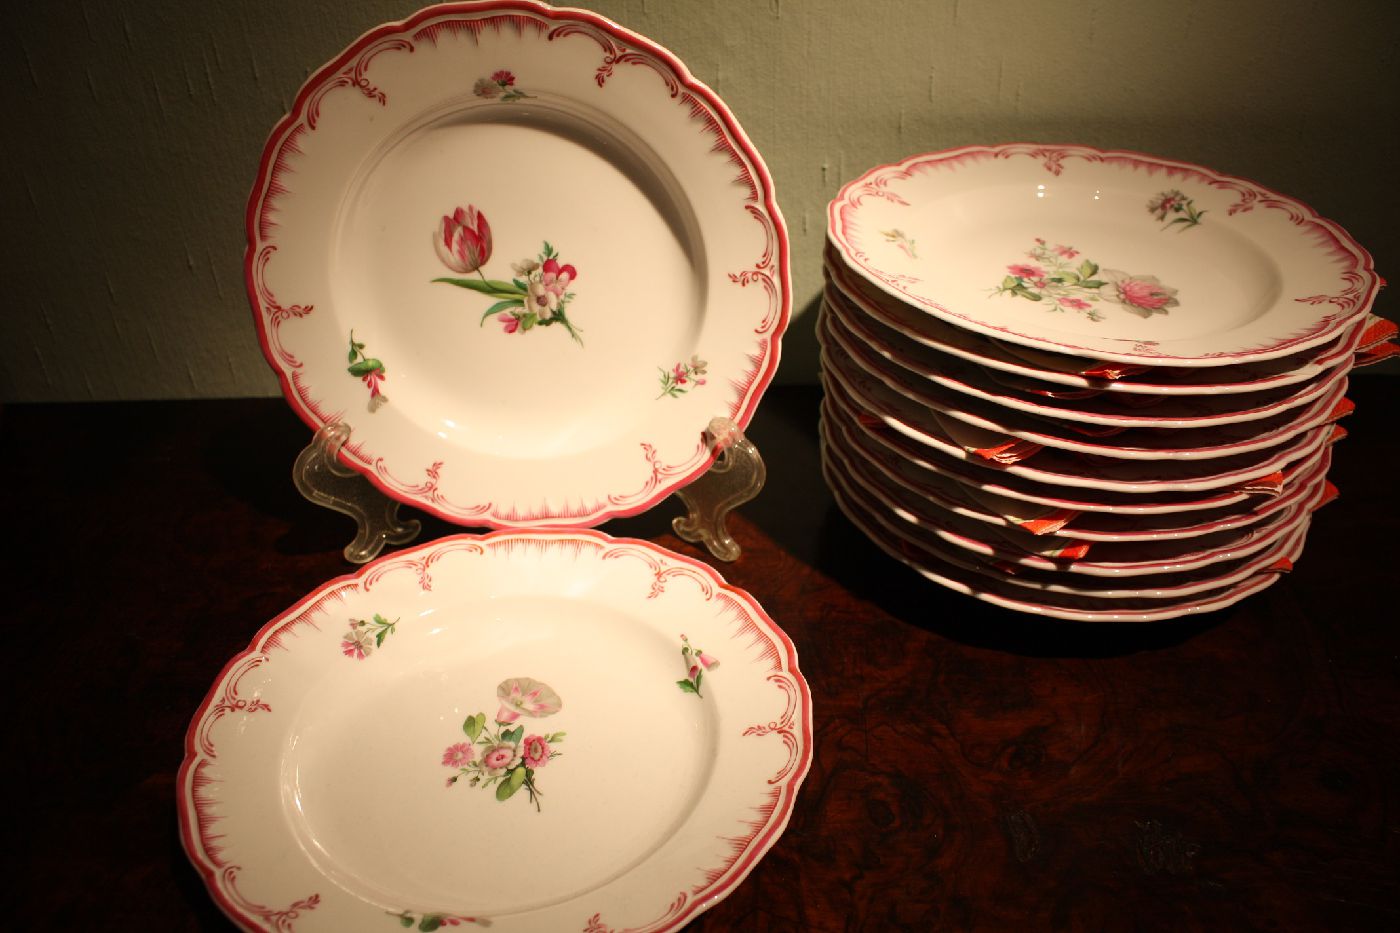 12 Mid-19th century hand-painted porcelain floral ornate KPM Berlin dessert plates